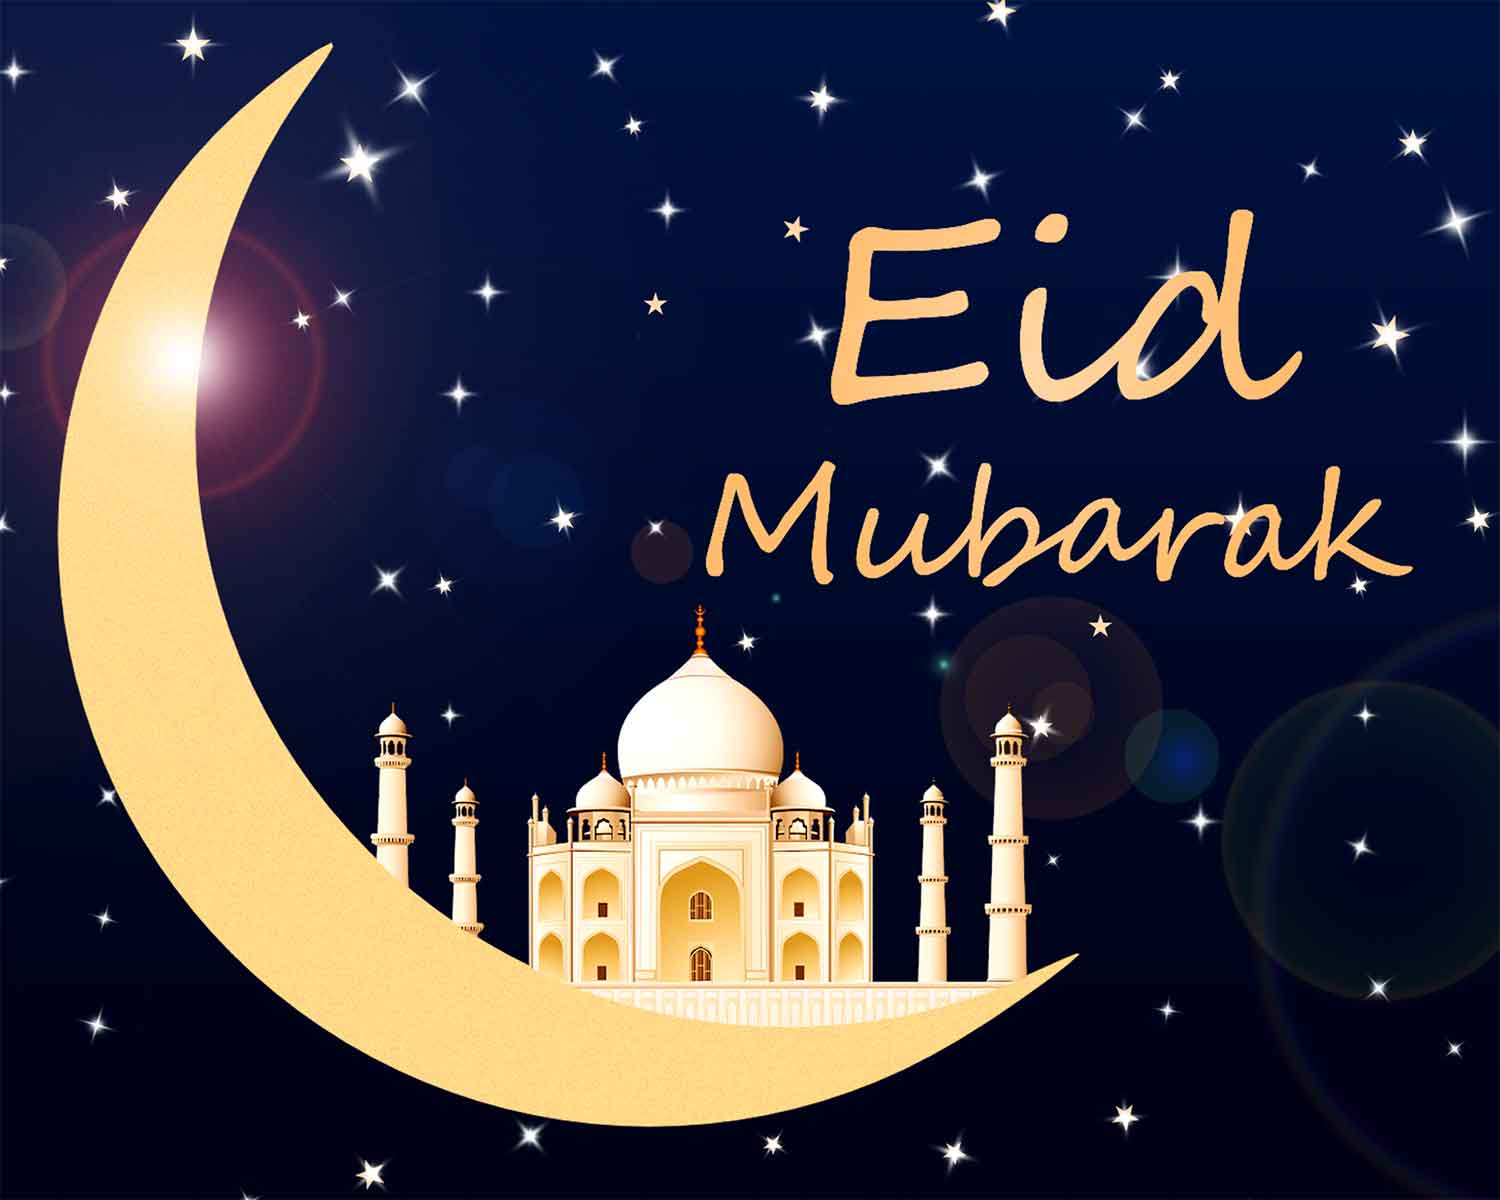 Eid Mubarak Image Free Download Free Download - The Mayanagari